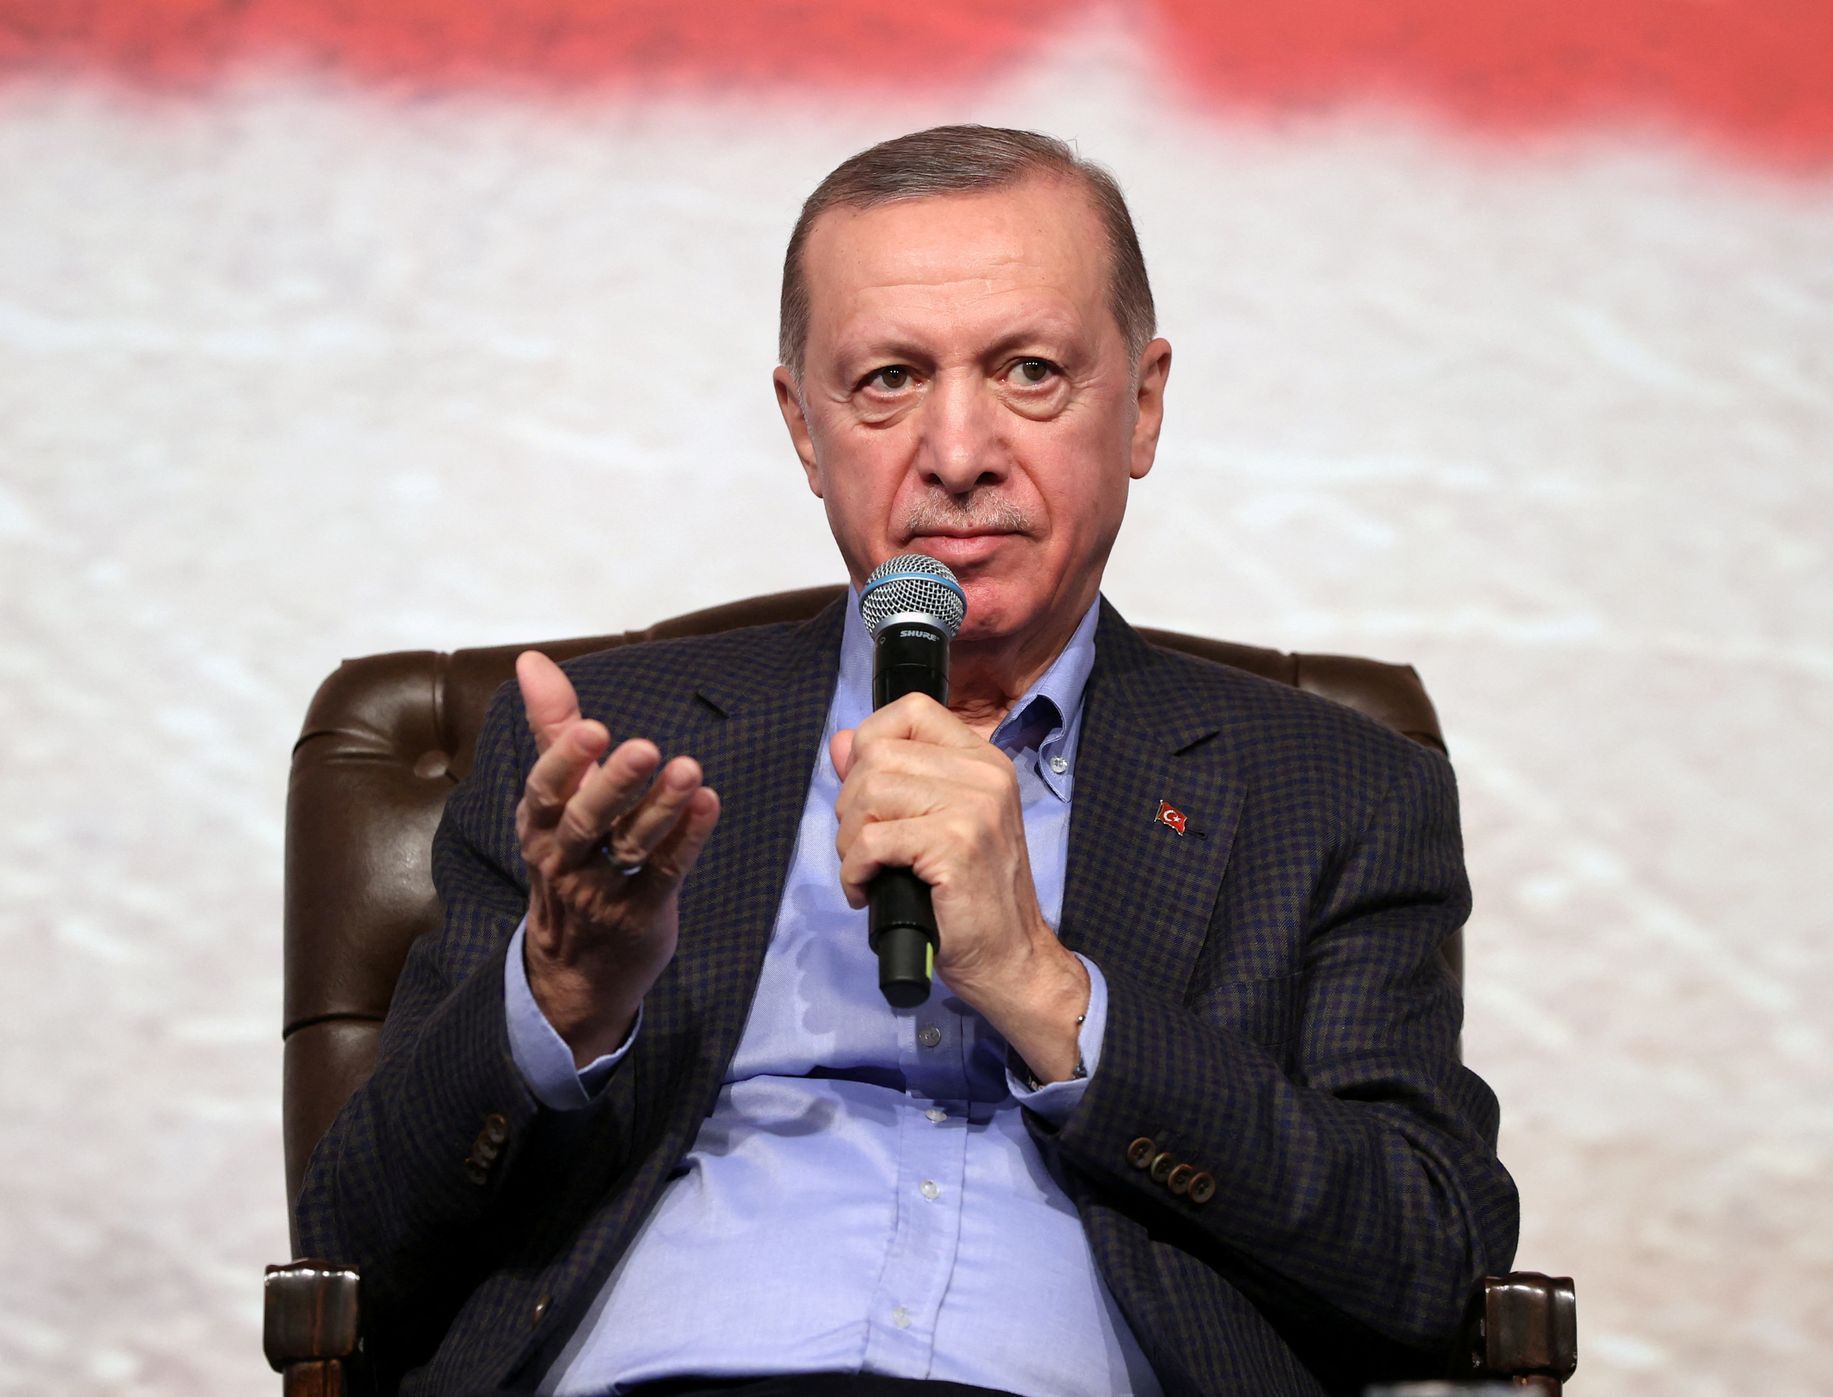 Recep Tayyip Erdogan, Turecko